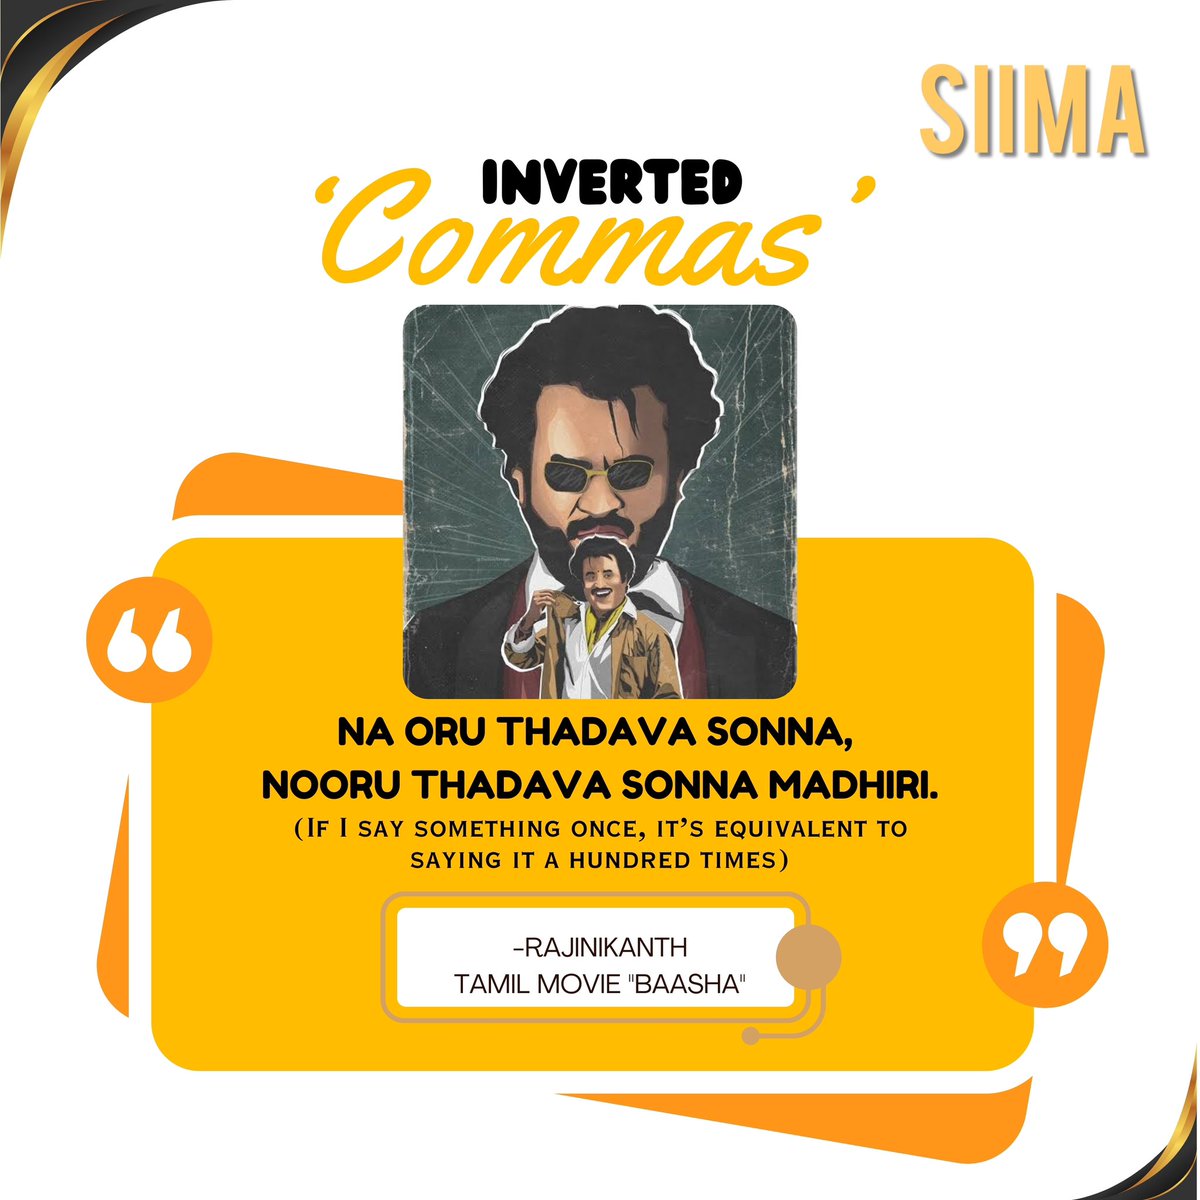 'Na Oru Thadava Sonna, Nooru Thadava Sonna Madhiri.” Rajinikanth's iconic dialogue from *Baasha* that continues to resonate with power and charisma. #InvertedCommas #SuperstarRajinikanth #Kollywood #Baasha #SIIMA